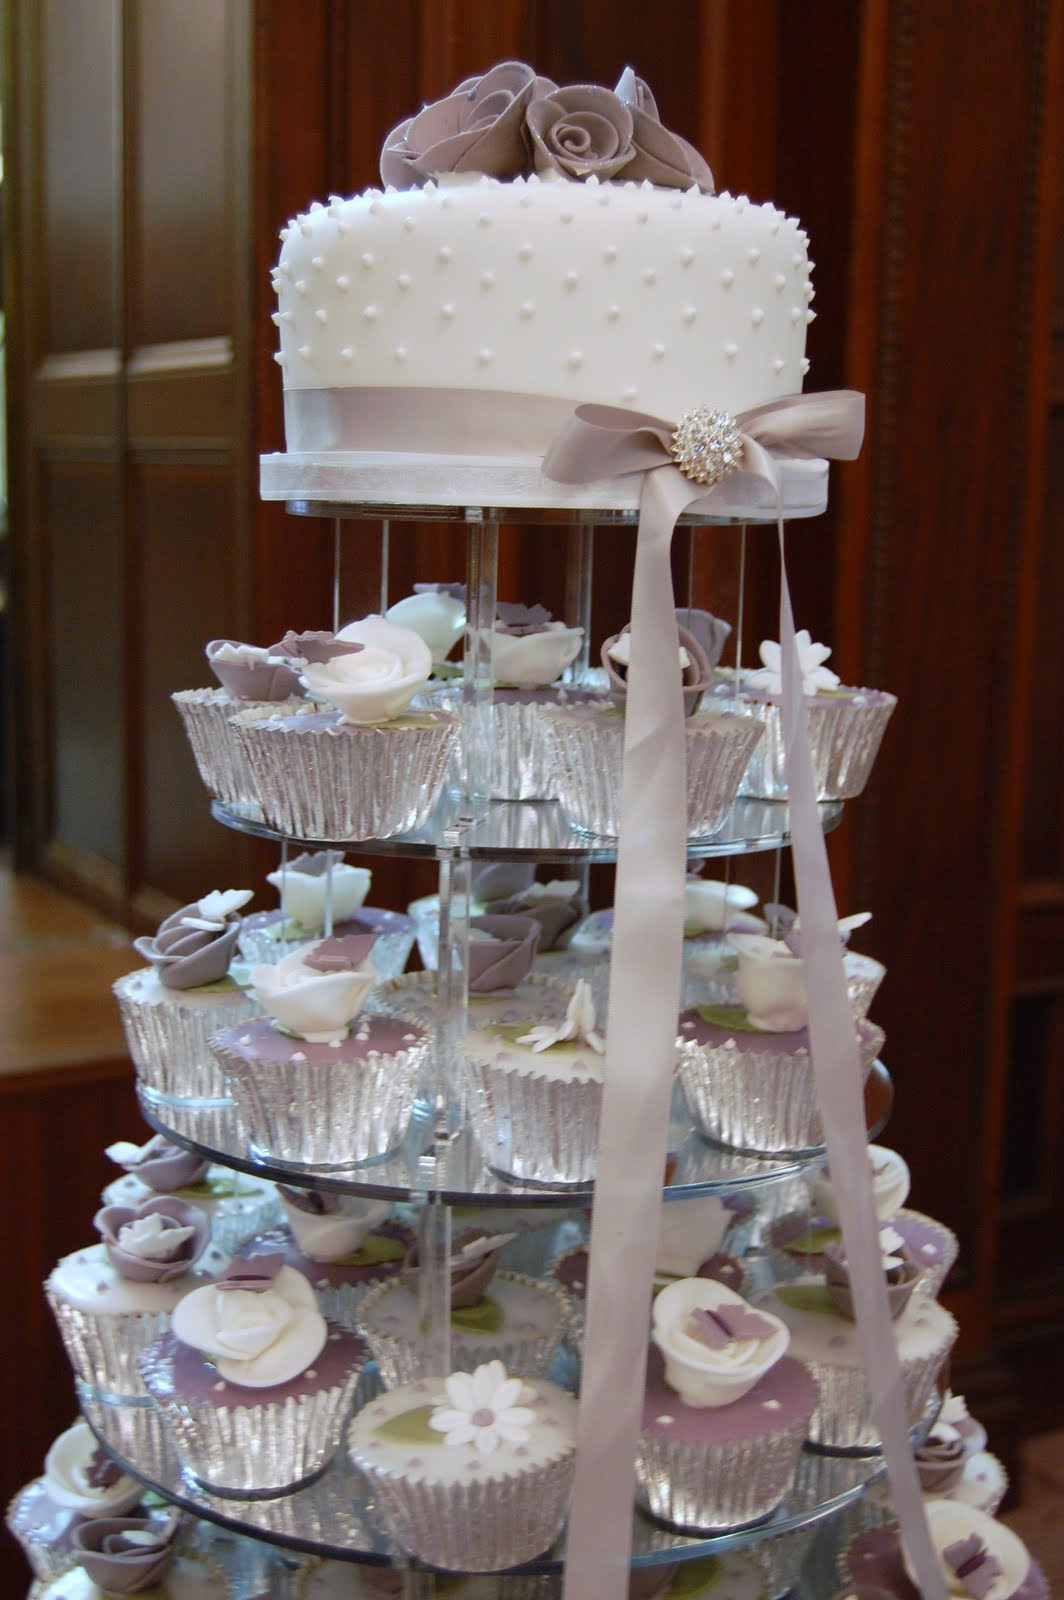 Top Tier Wedding Cakes
 Tiered cupcake wedding cakes idea in 2017